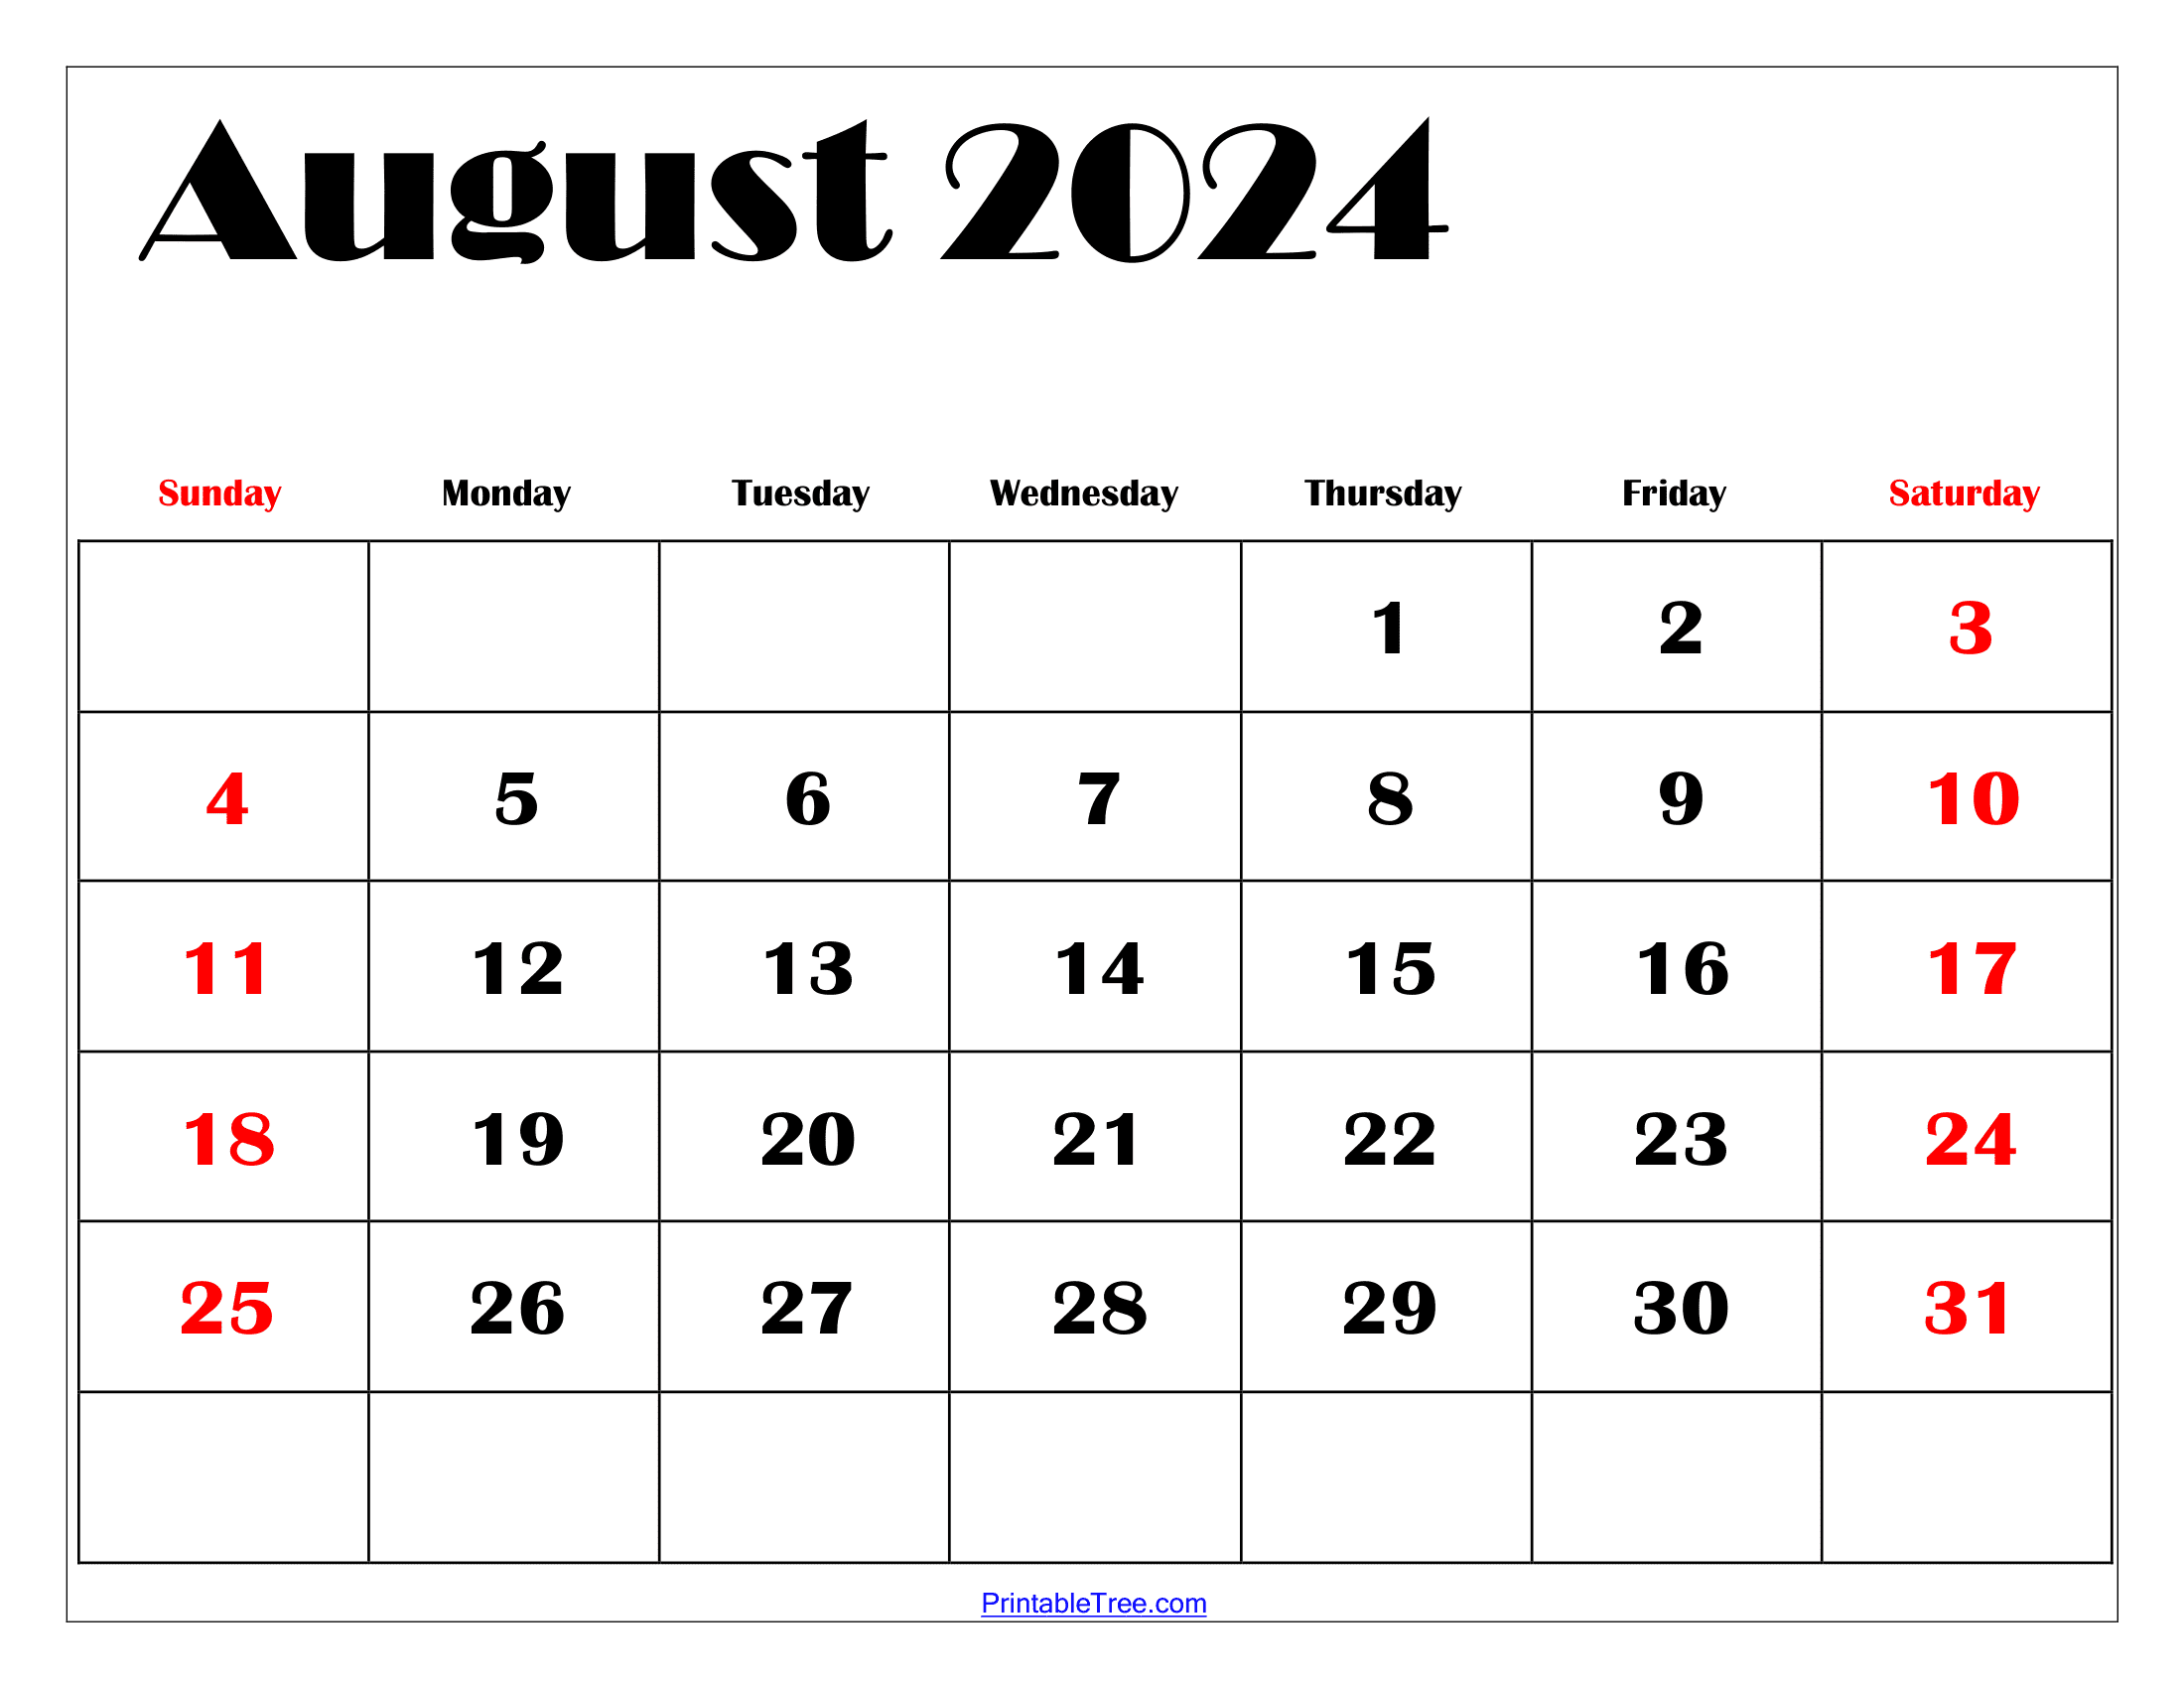 Calendar August 2024 Singapore Easy To Use Calendar App 2024 - Free Printable 3 Month Calendar August 2024